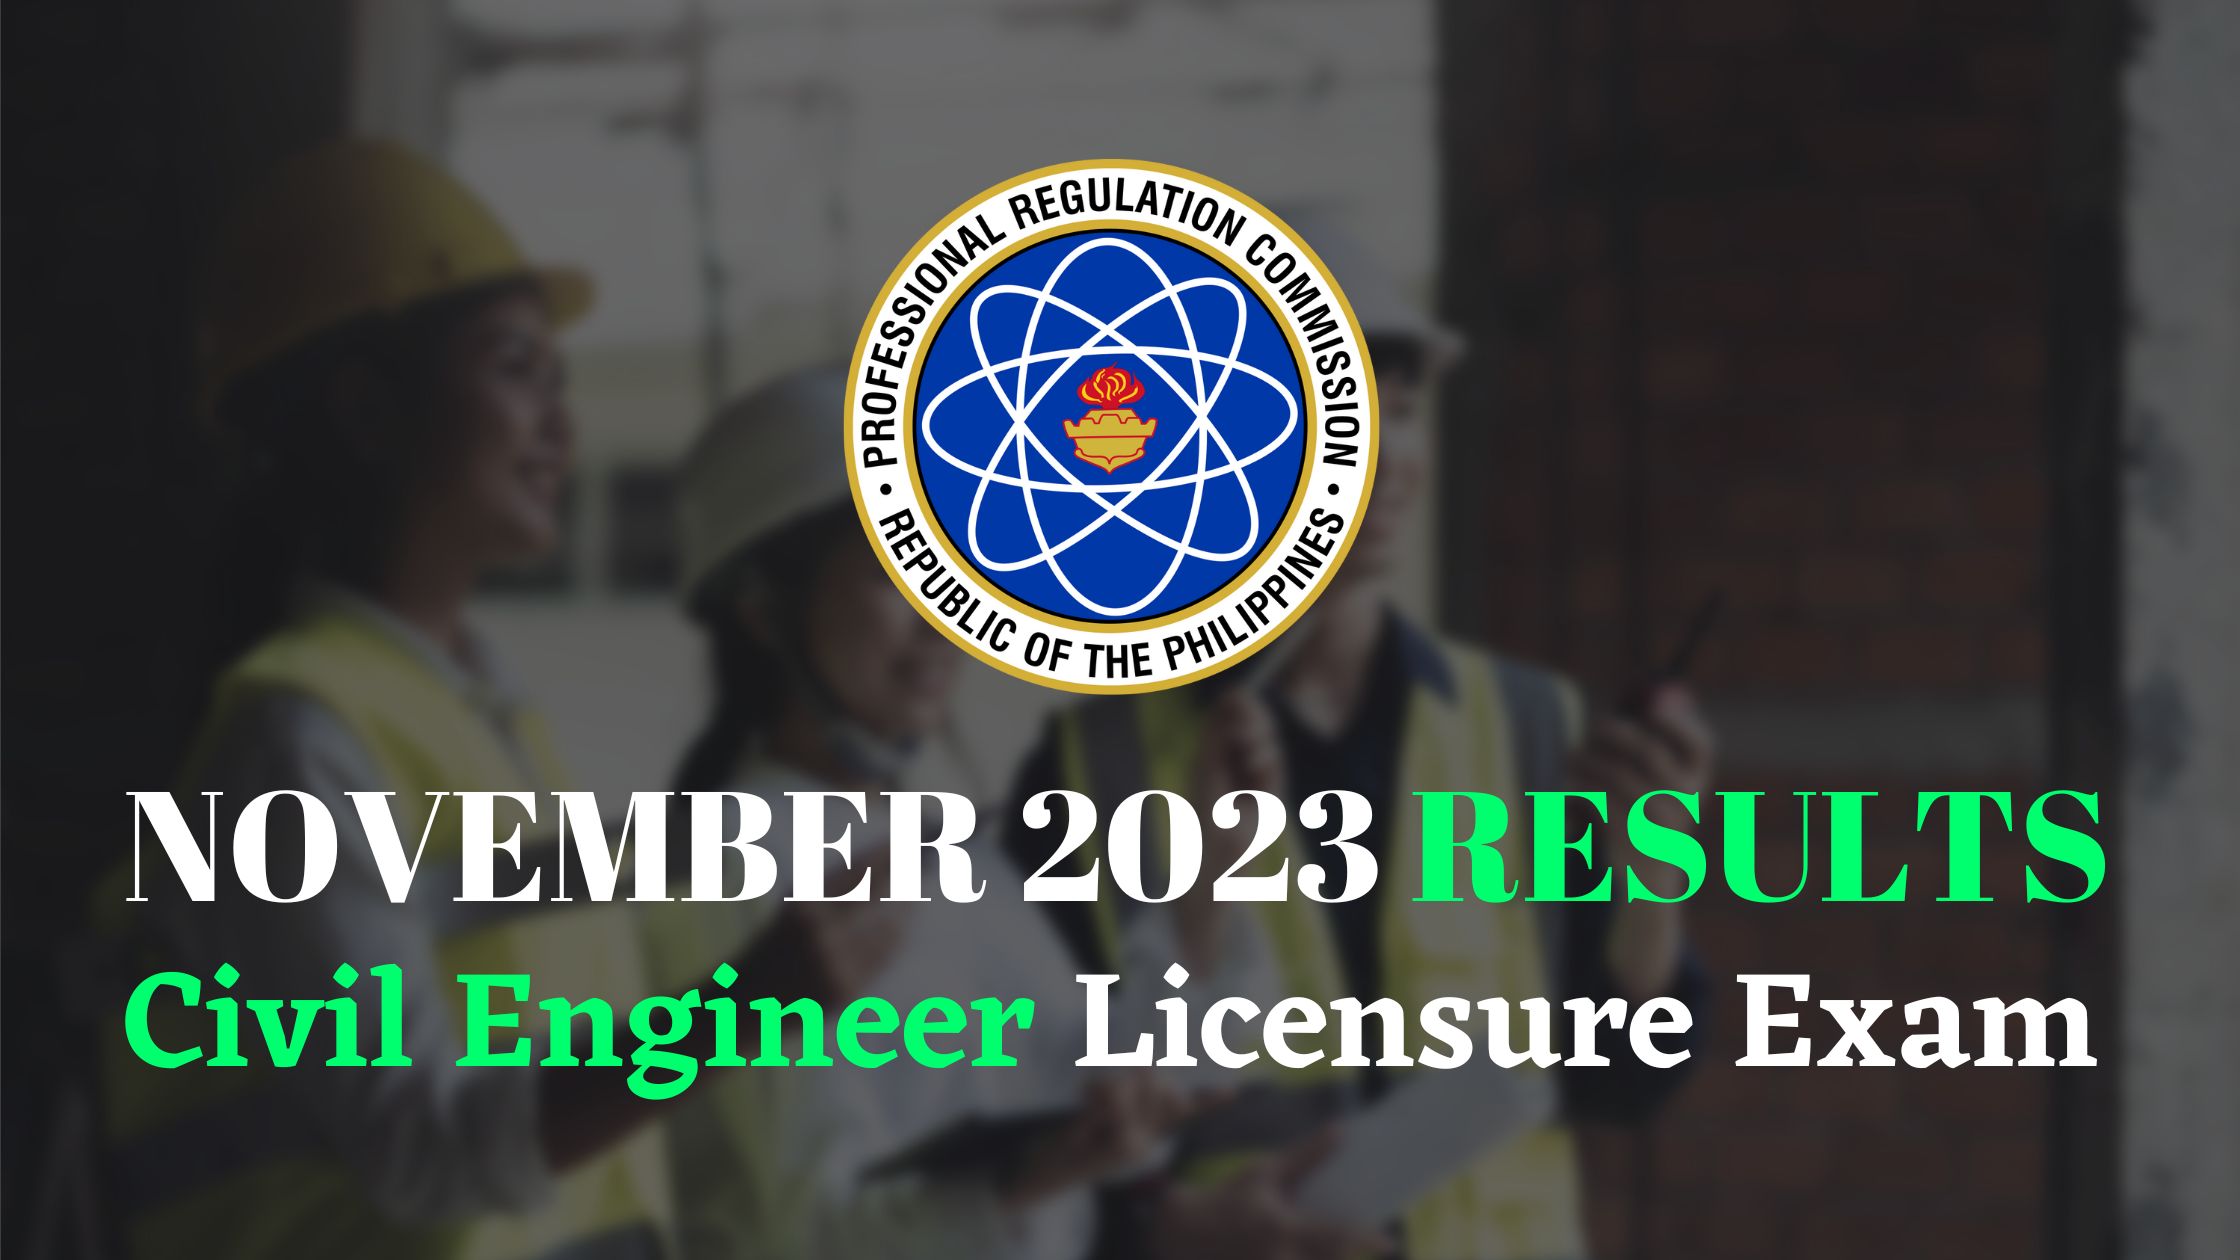 NOVEMBER 2023 Civil Engineer Licensure Exam Results